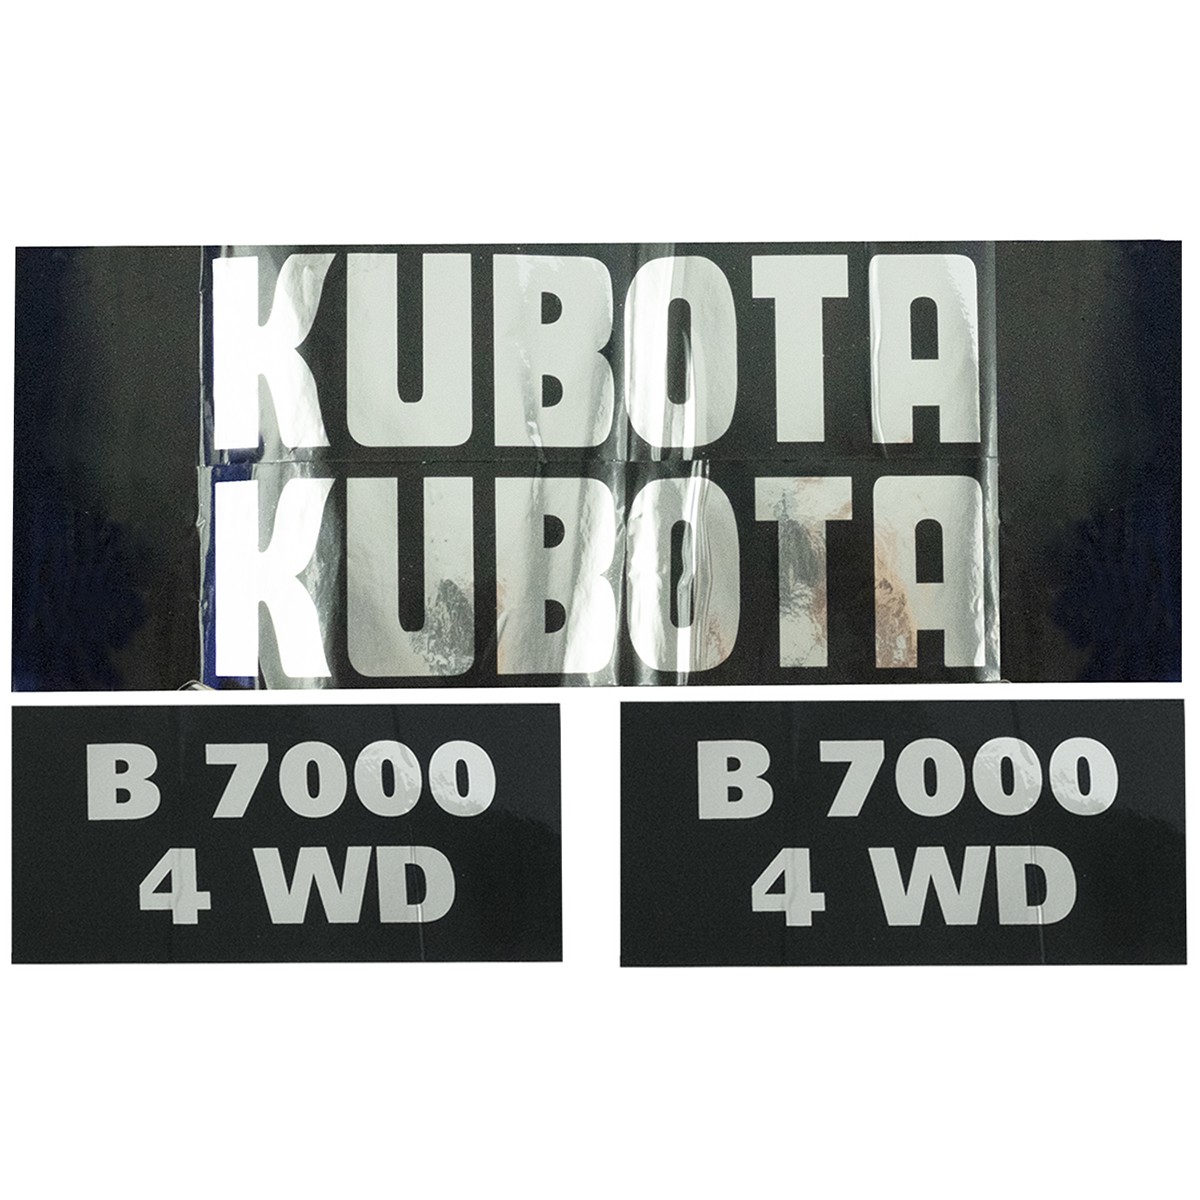 Autocollants Kubota B7000 4WD